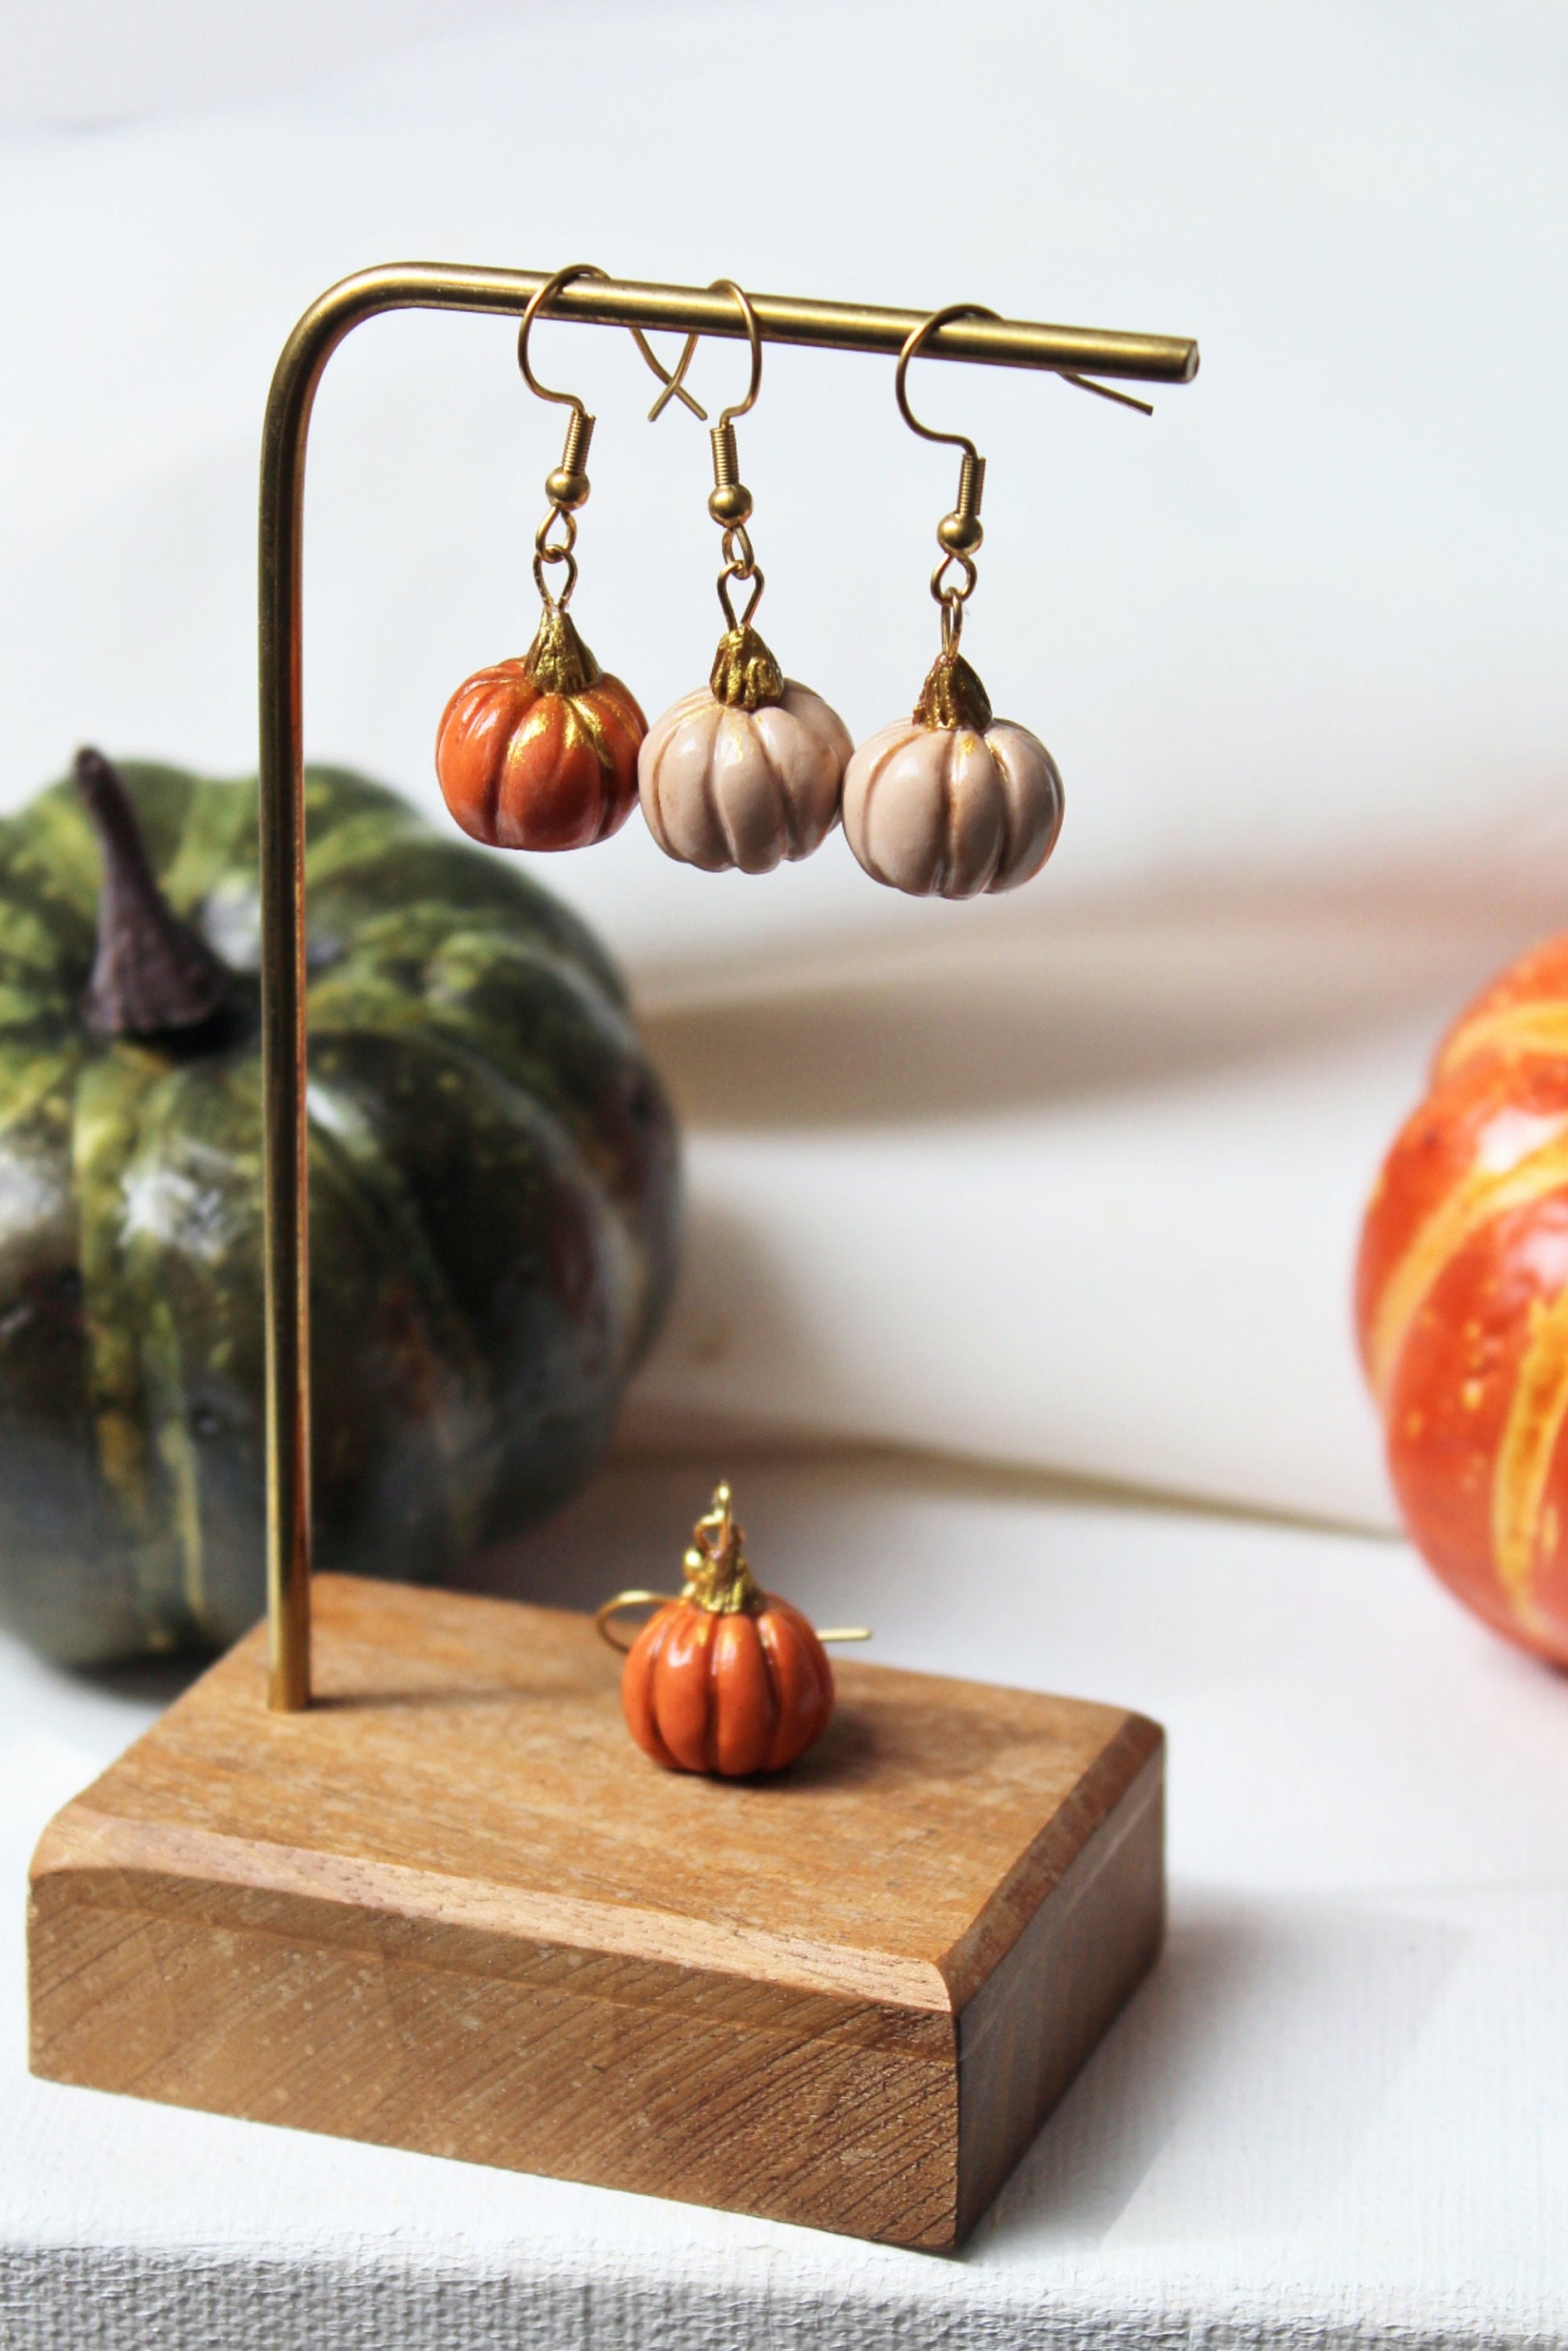 Pumpkin Earrings, Polymer Clay Earrings, Pumpkin Dangle Earrings, Autumn Earrings, Halloween Earrings, Clay Earrings,Handmade,Gift for her